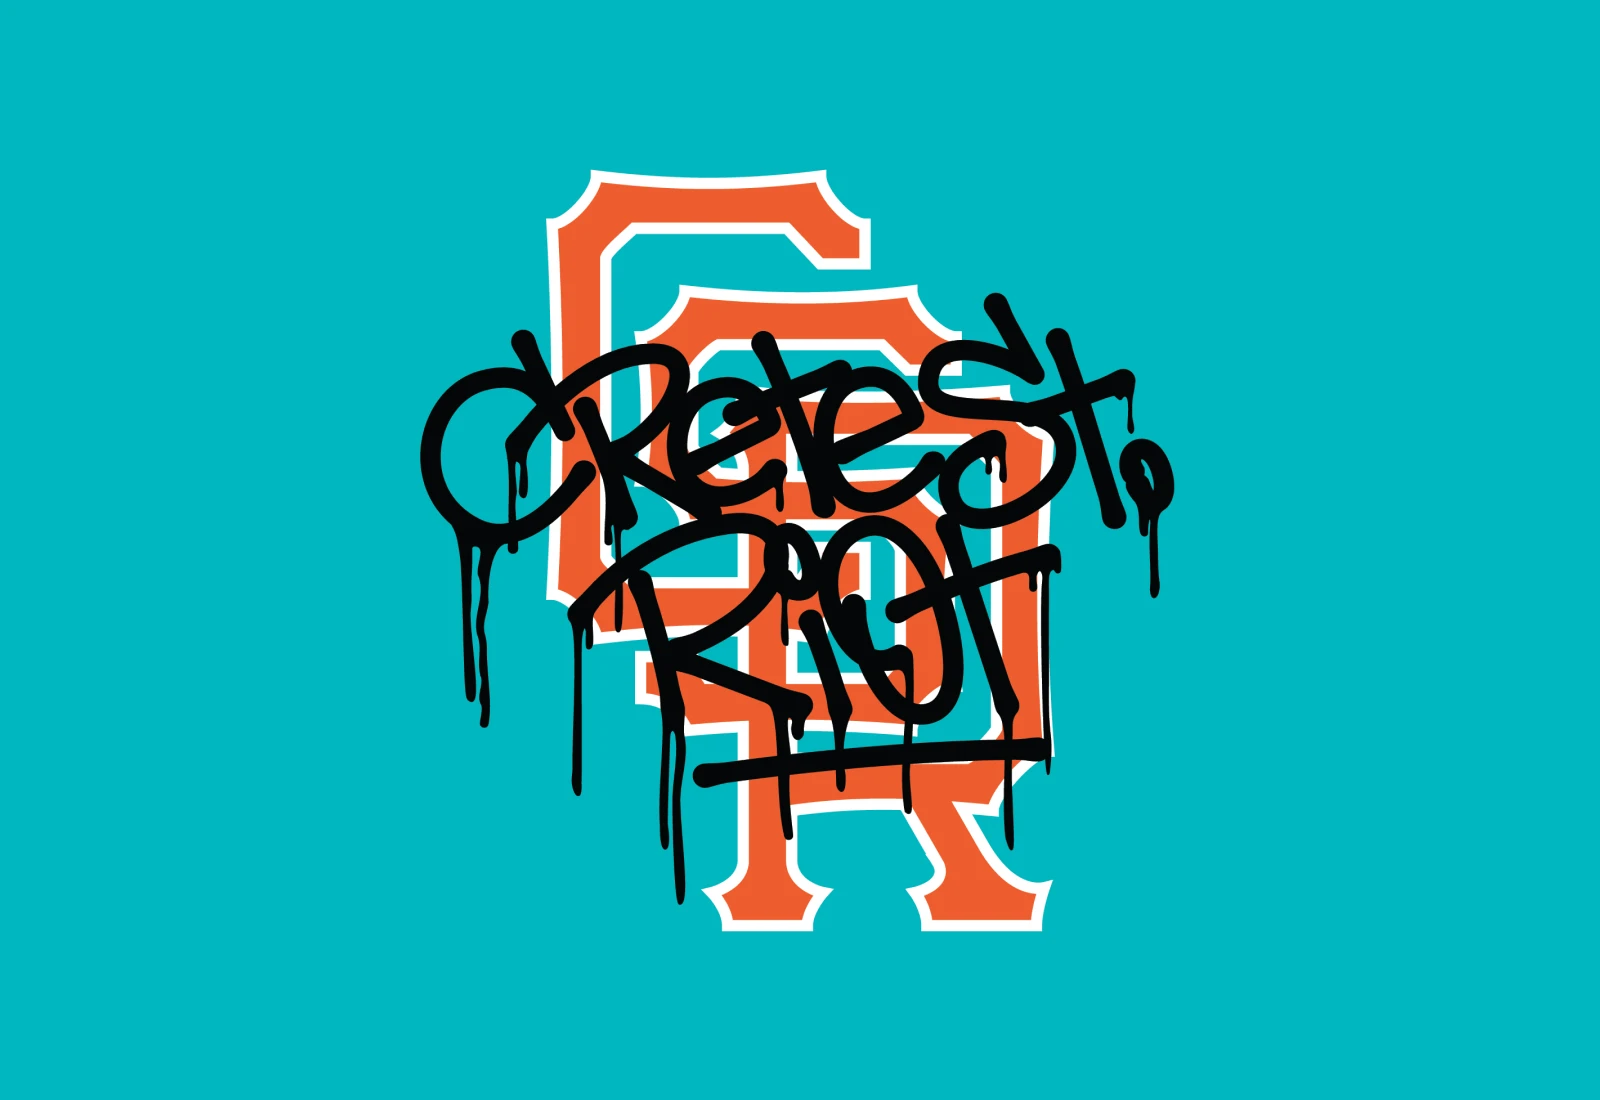 Crete St Riot in graffiti handstyle on top of a CSR monogram